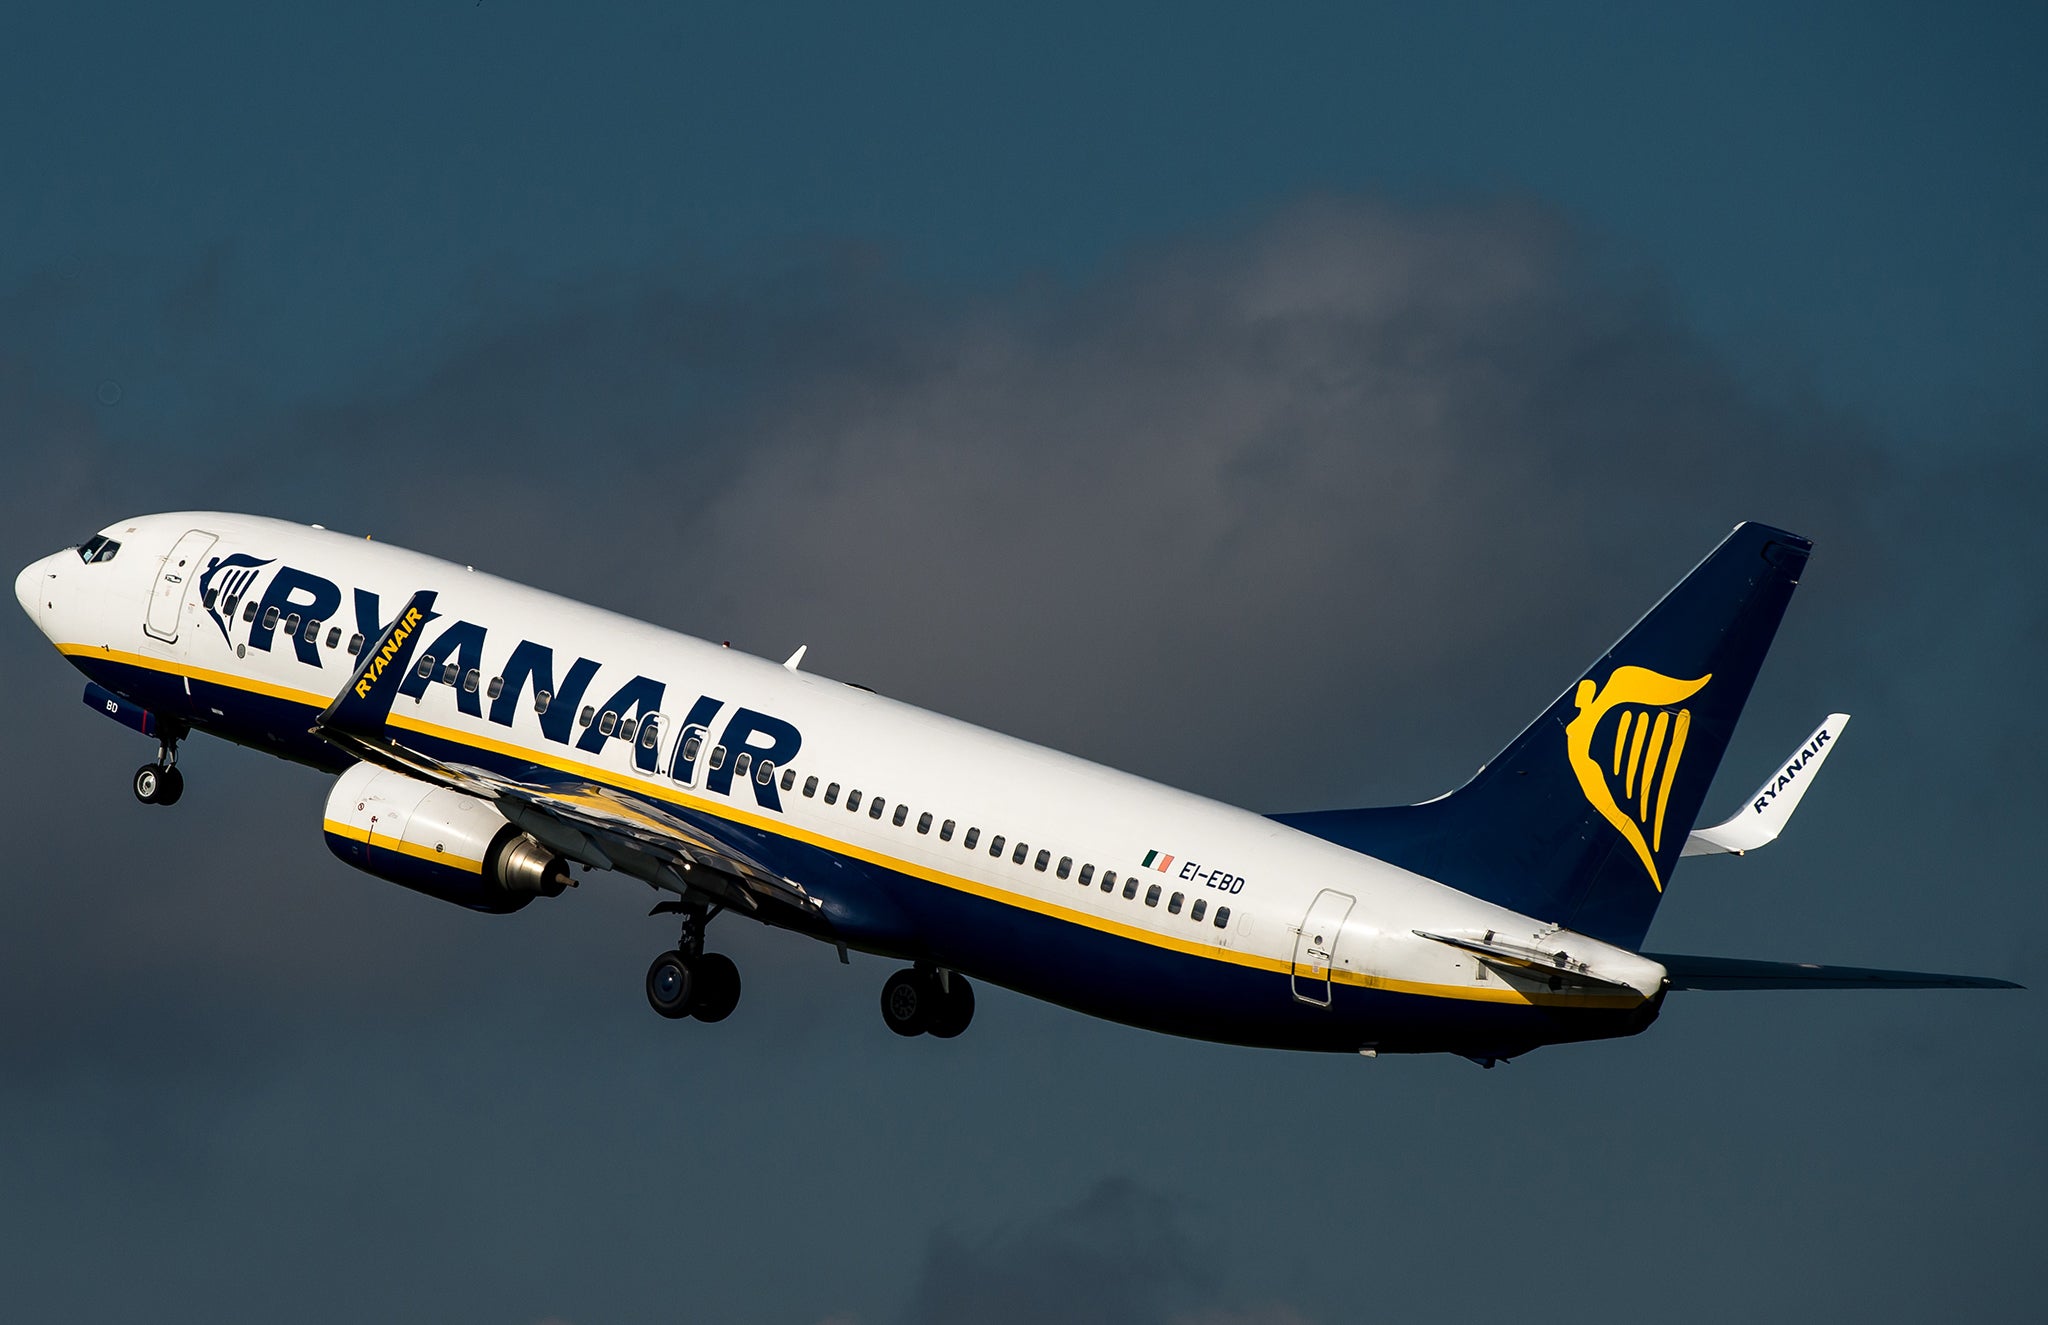 Lars Lokke Rasmussen flew to Malaga, Spain with the Irish budget airline, Ryanair